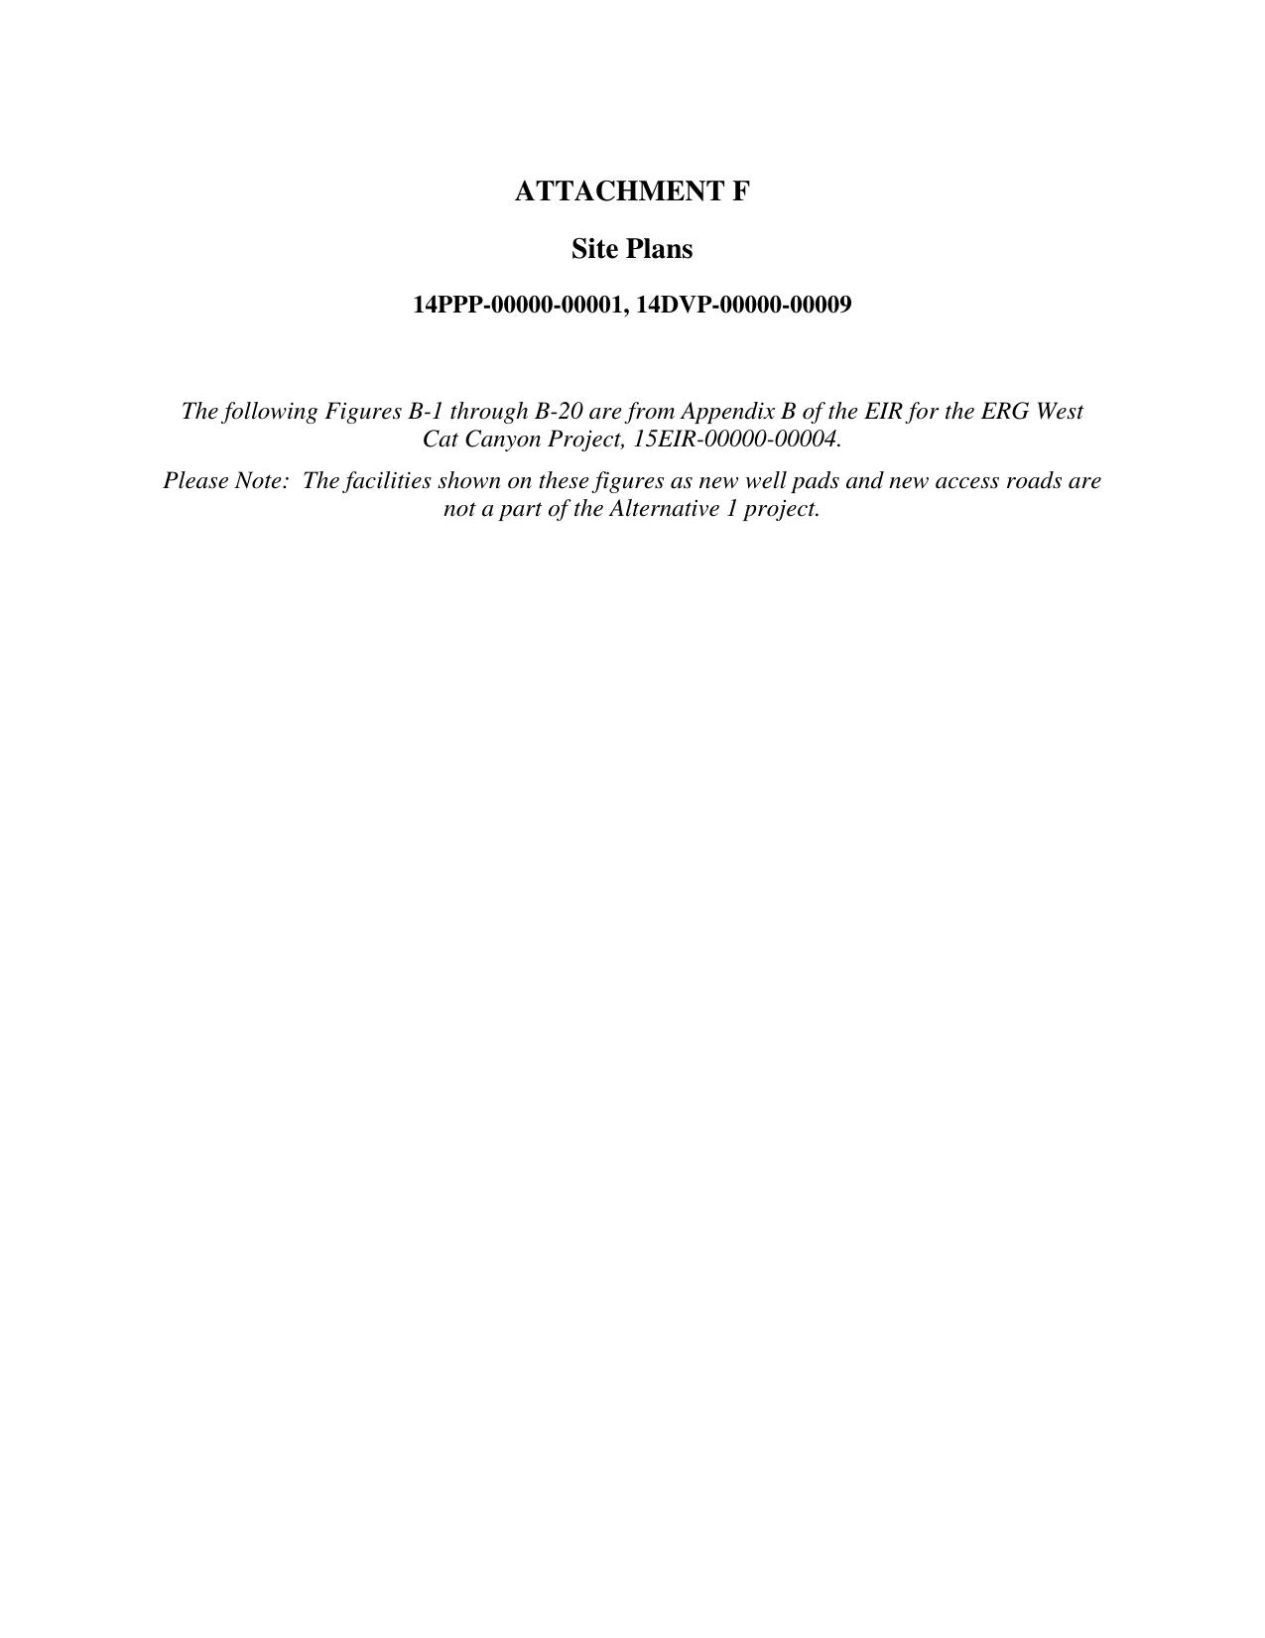 Cat Canyon EIR: 'Site Plans' PDF